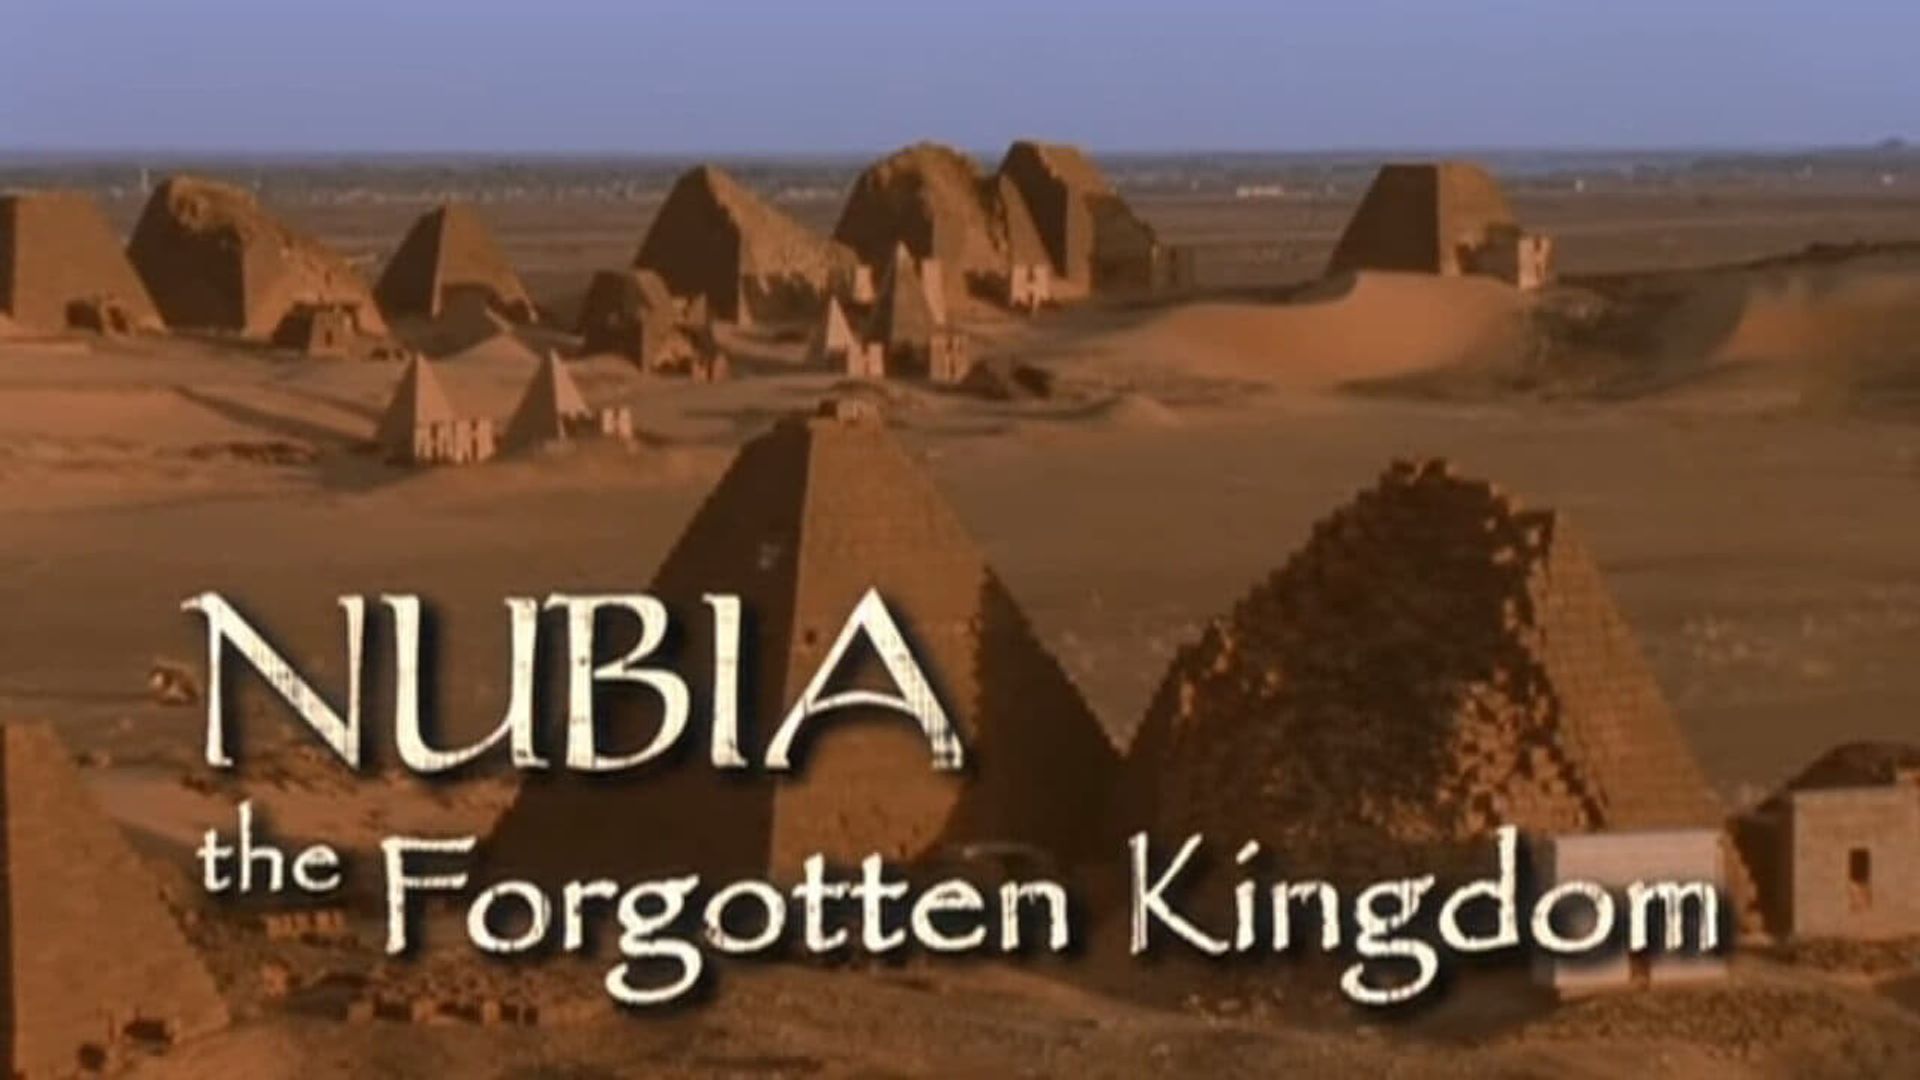 Nubia: The Forgotten Kingdom background